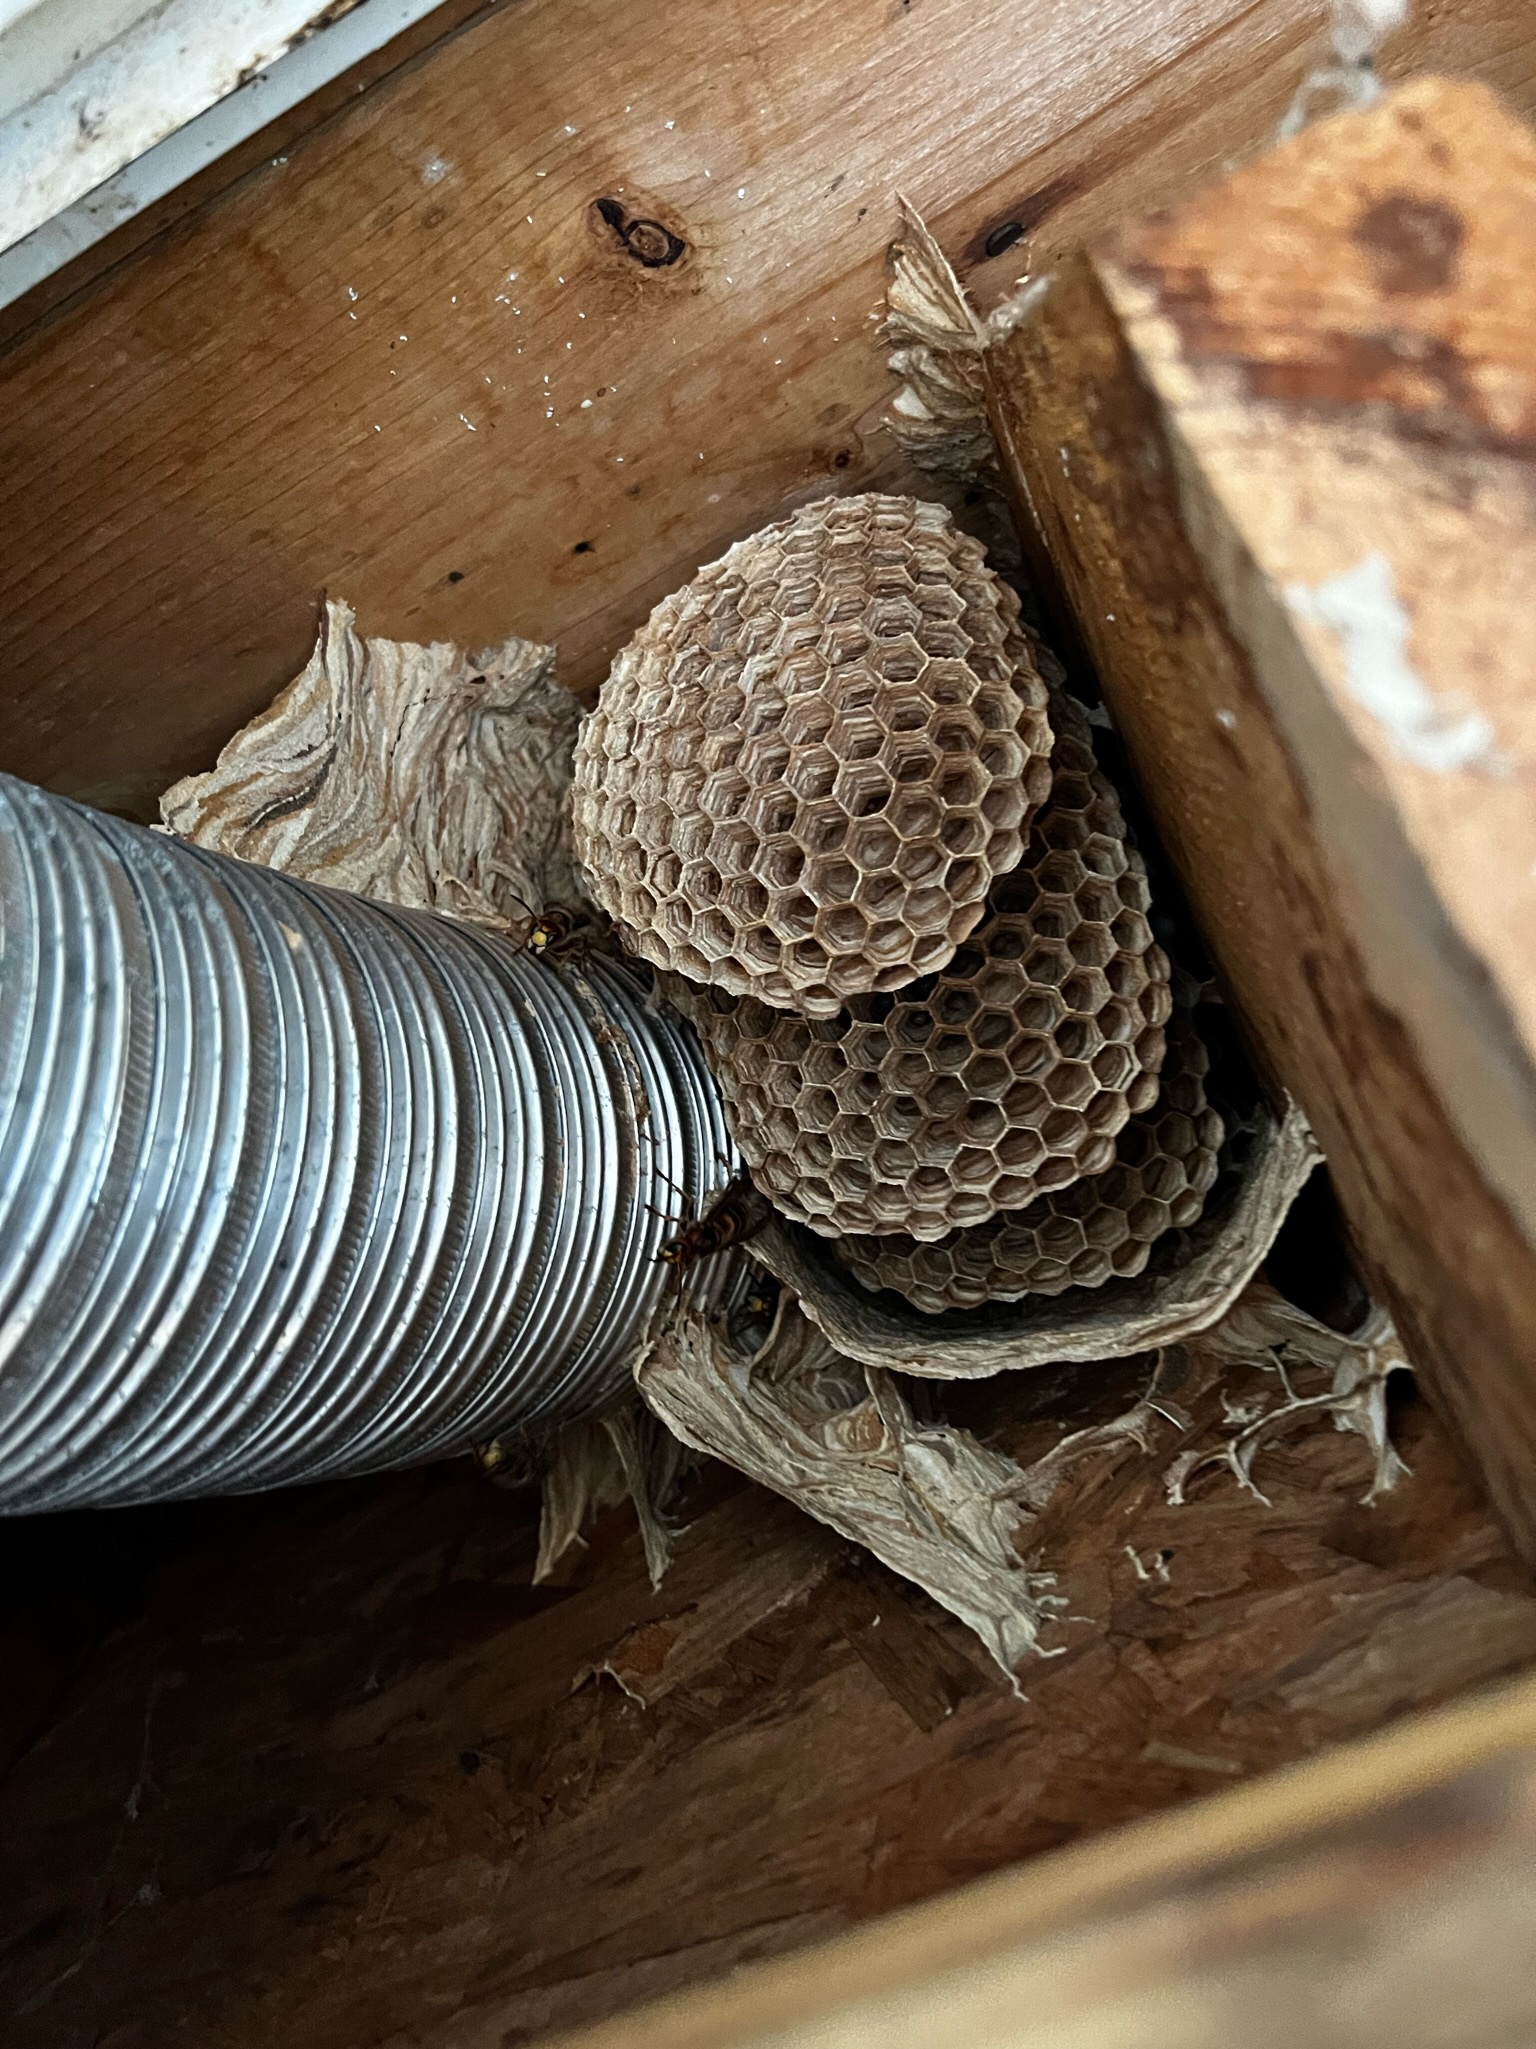 european hornets Johns Creek hive removal